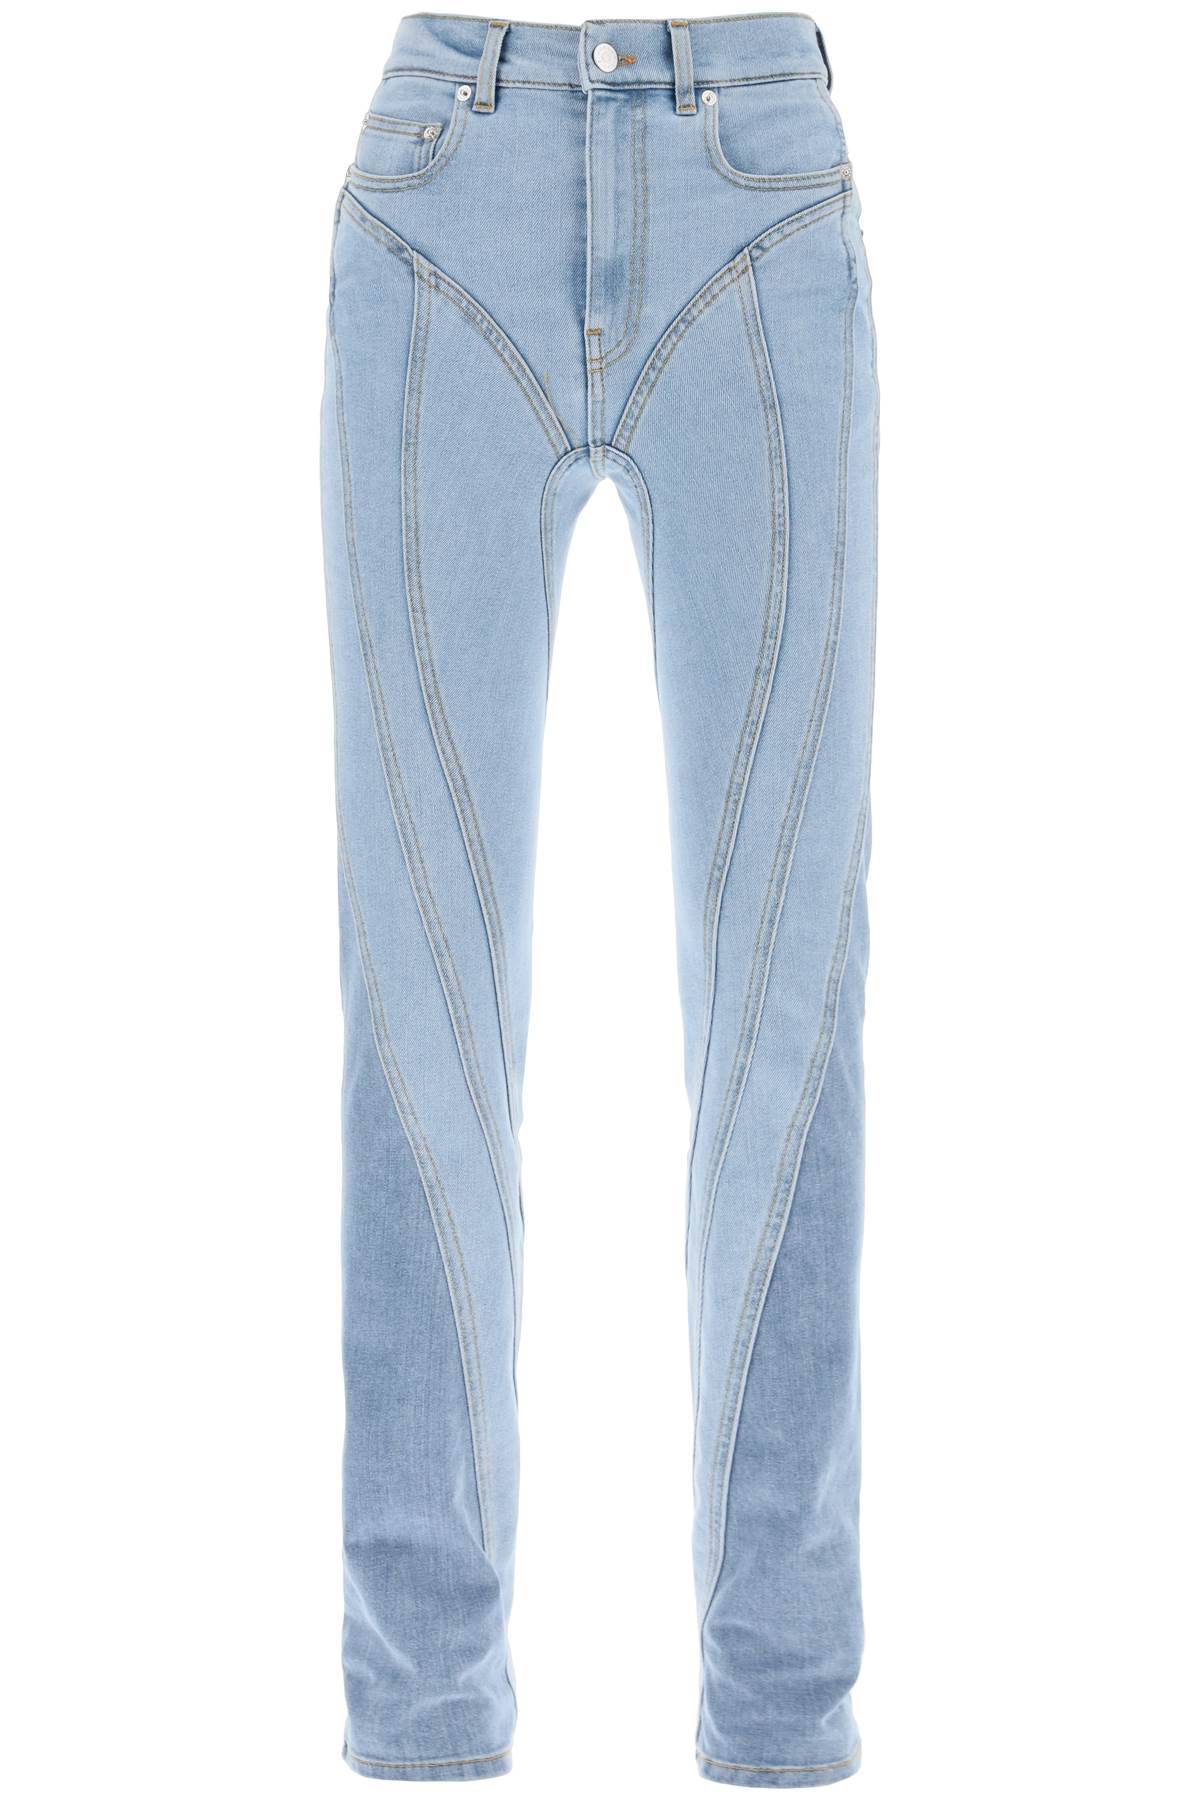 Mugler MUGLER spiral two-tone skinny jeans